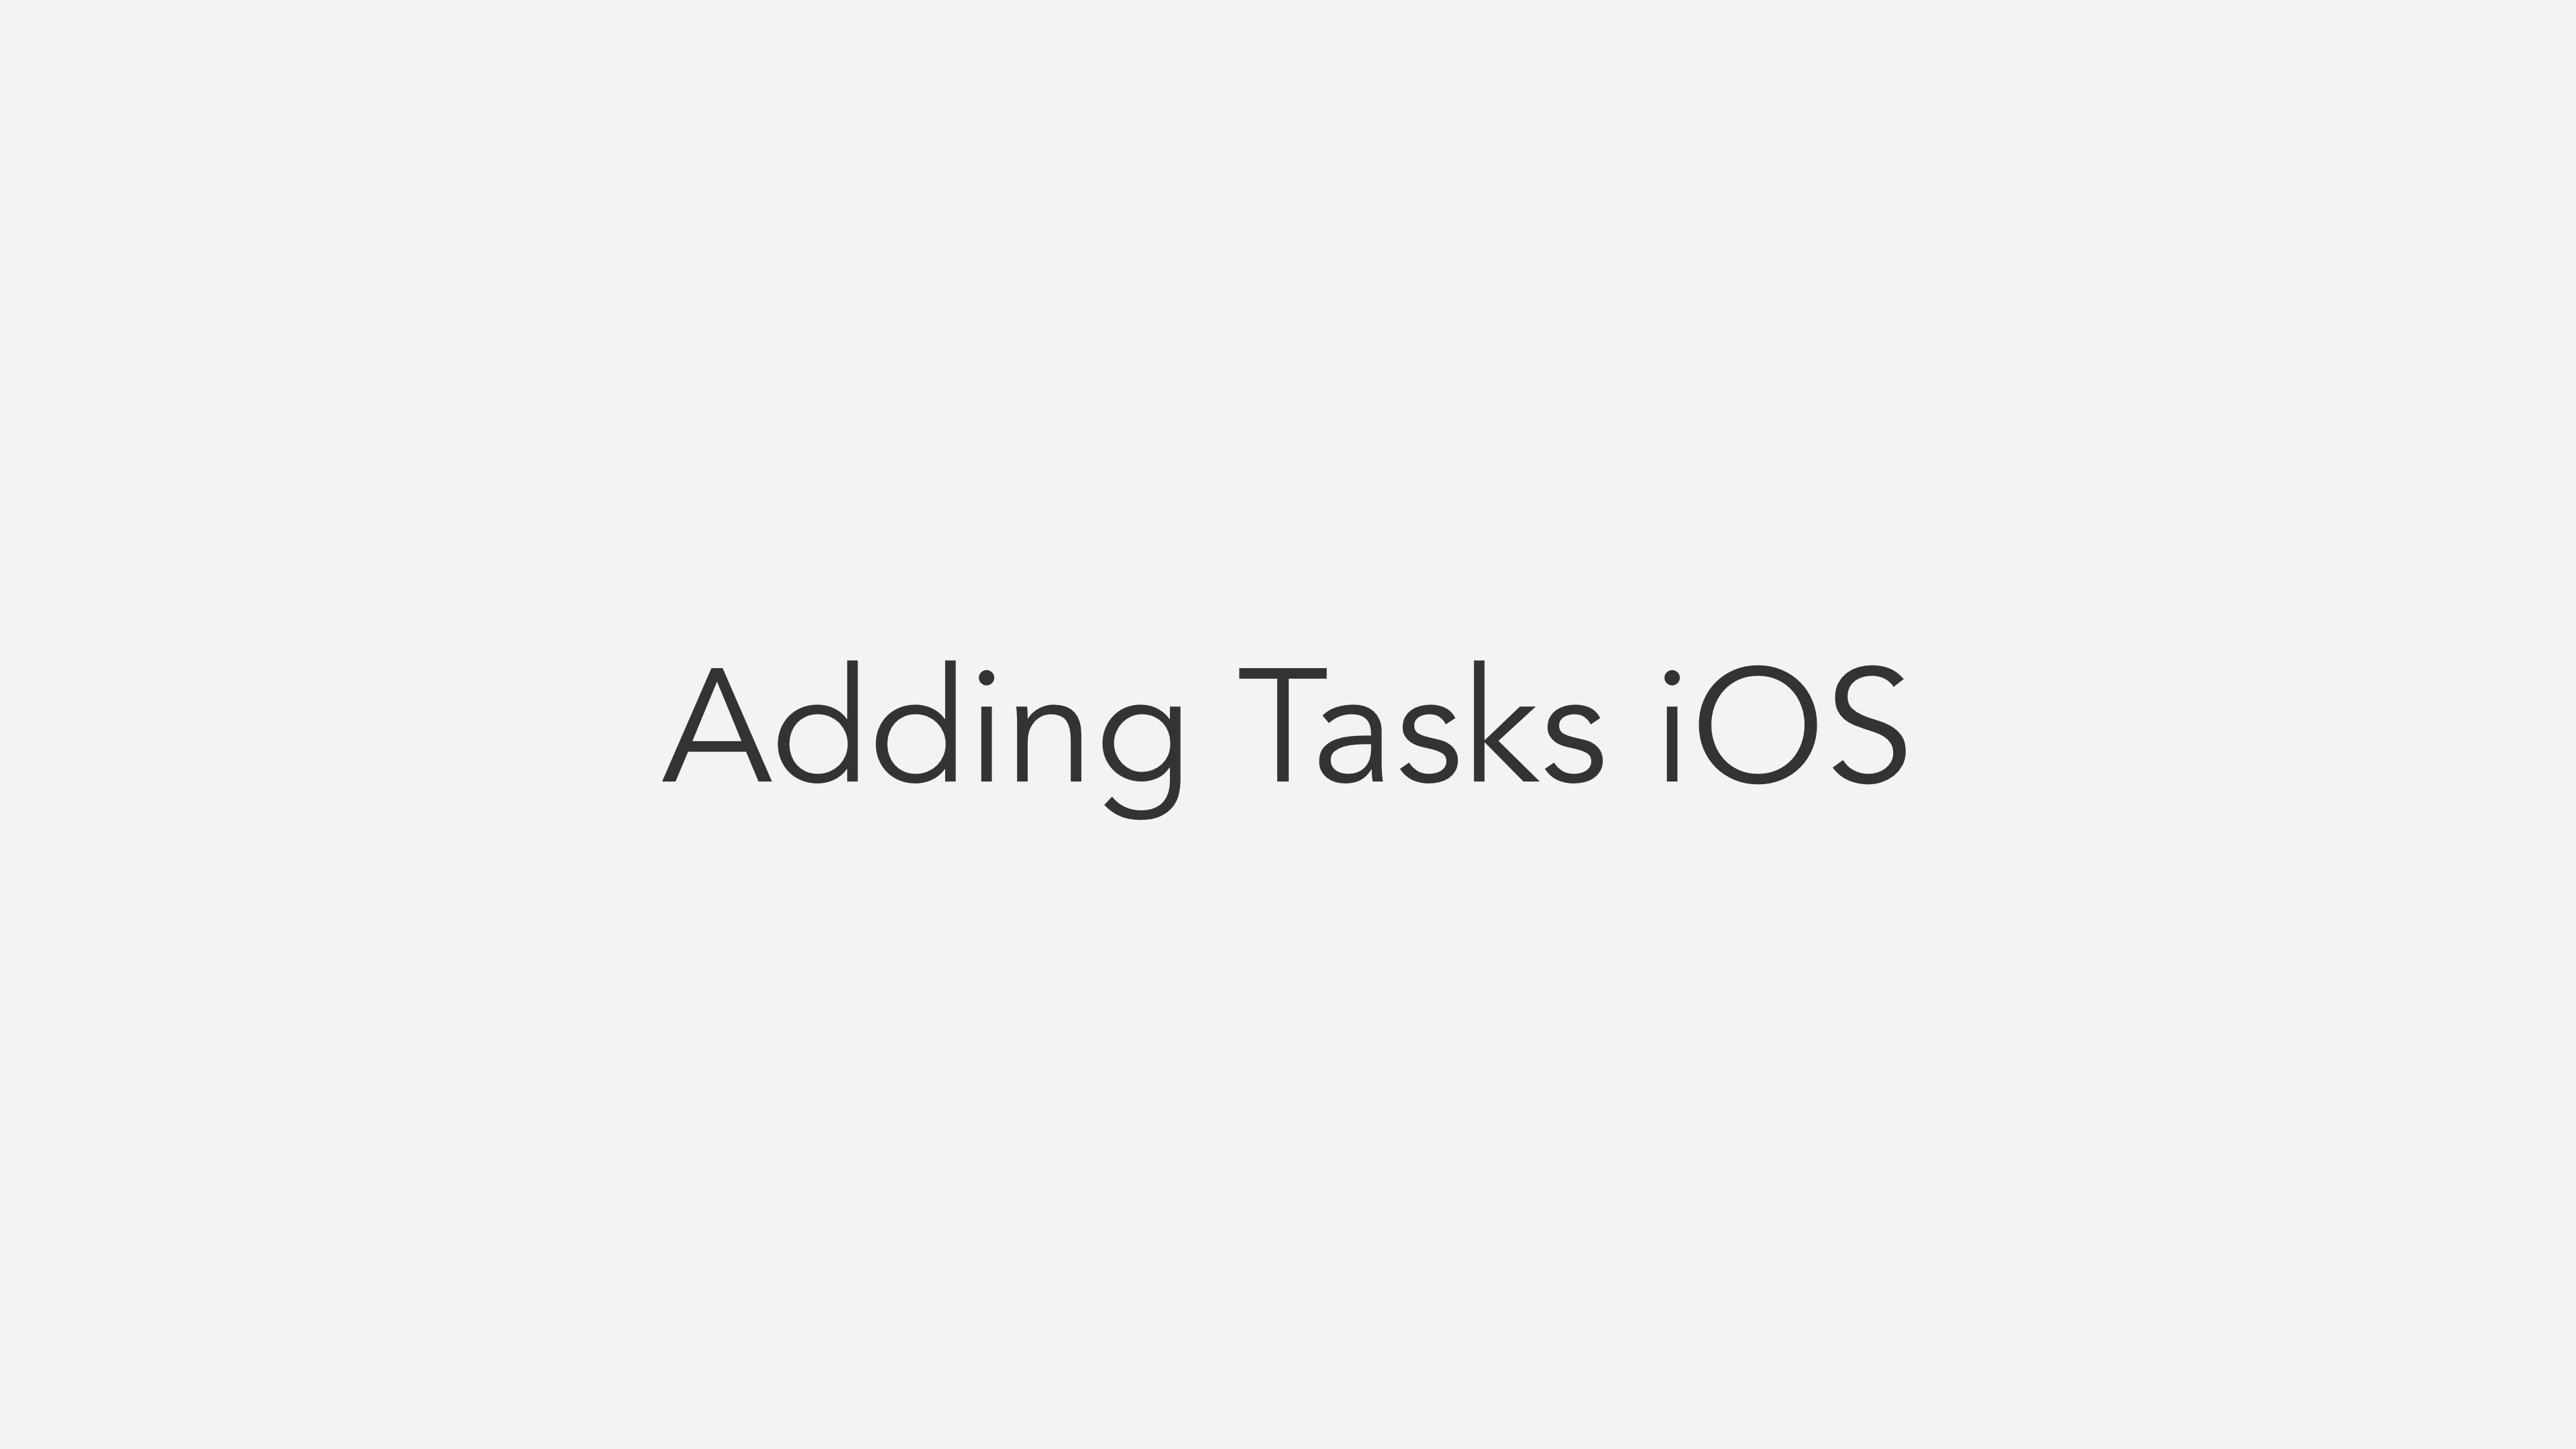 Adding Tasks in iOS